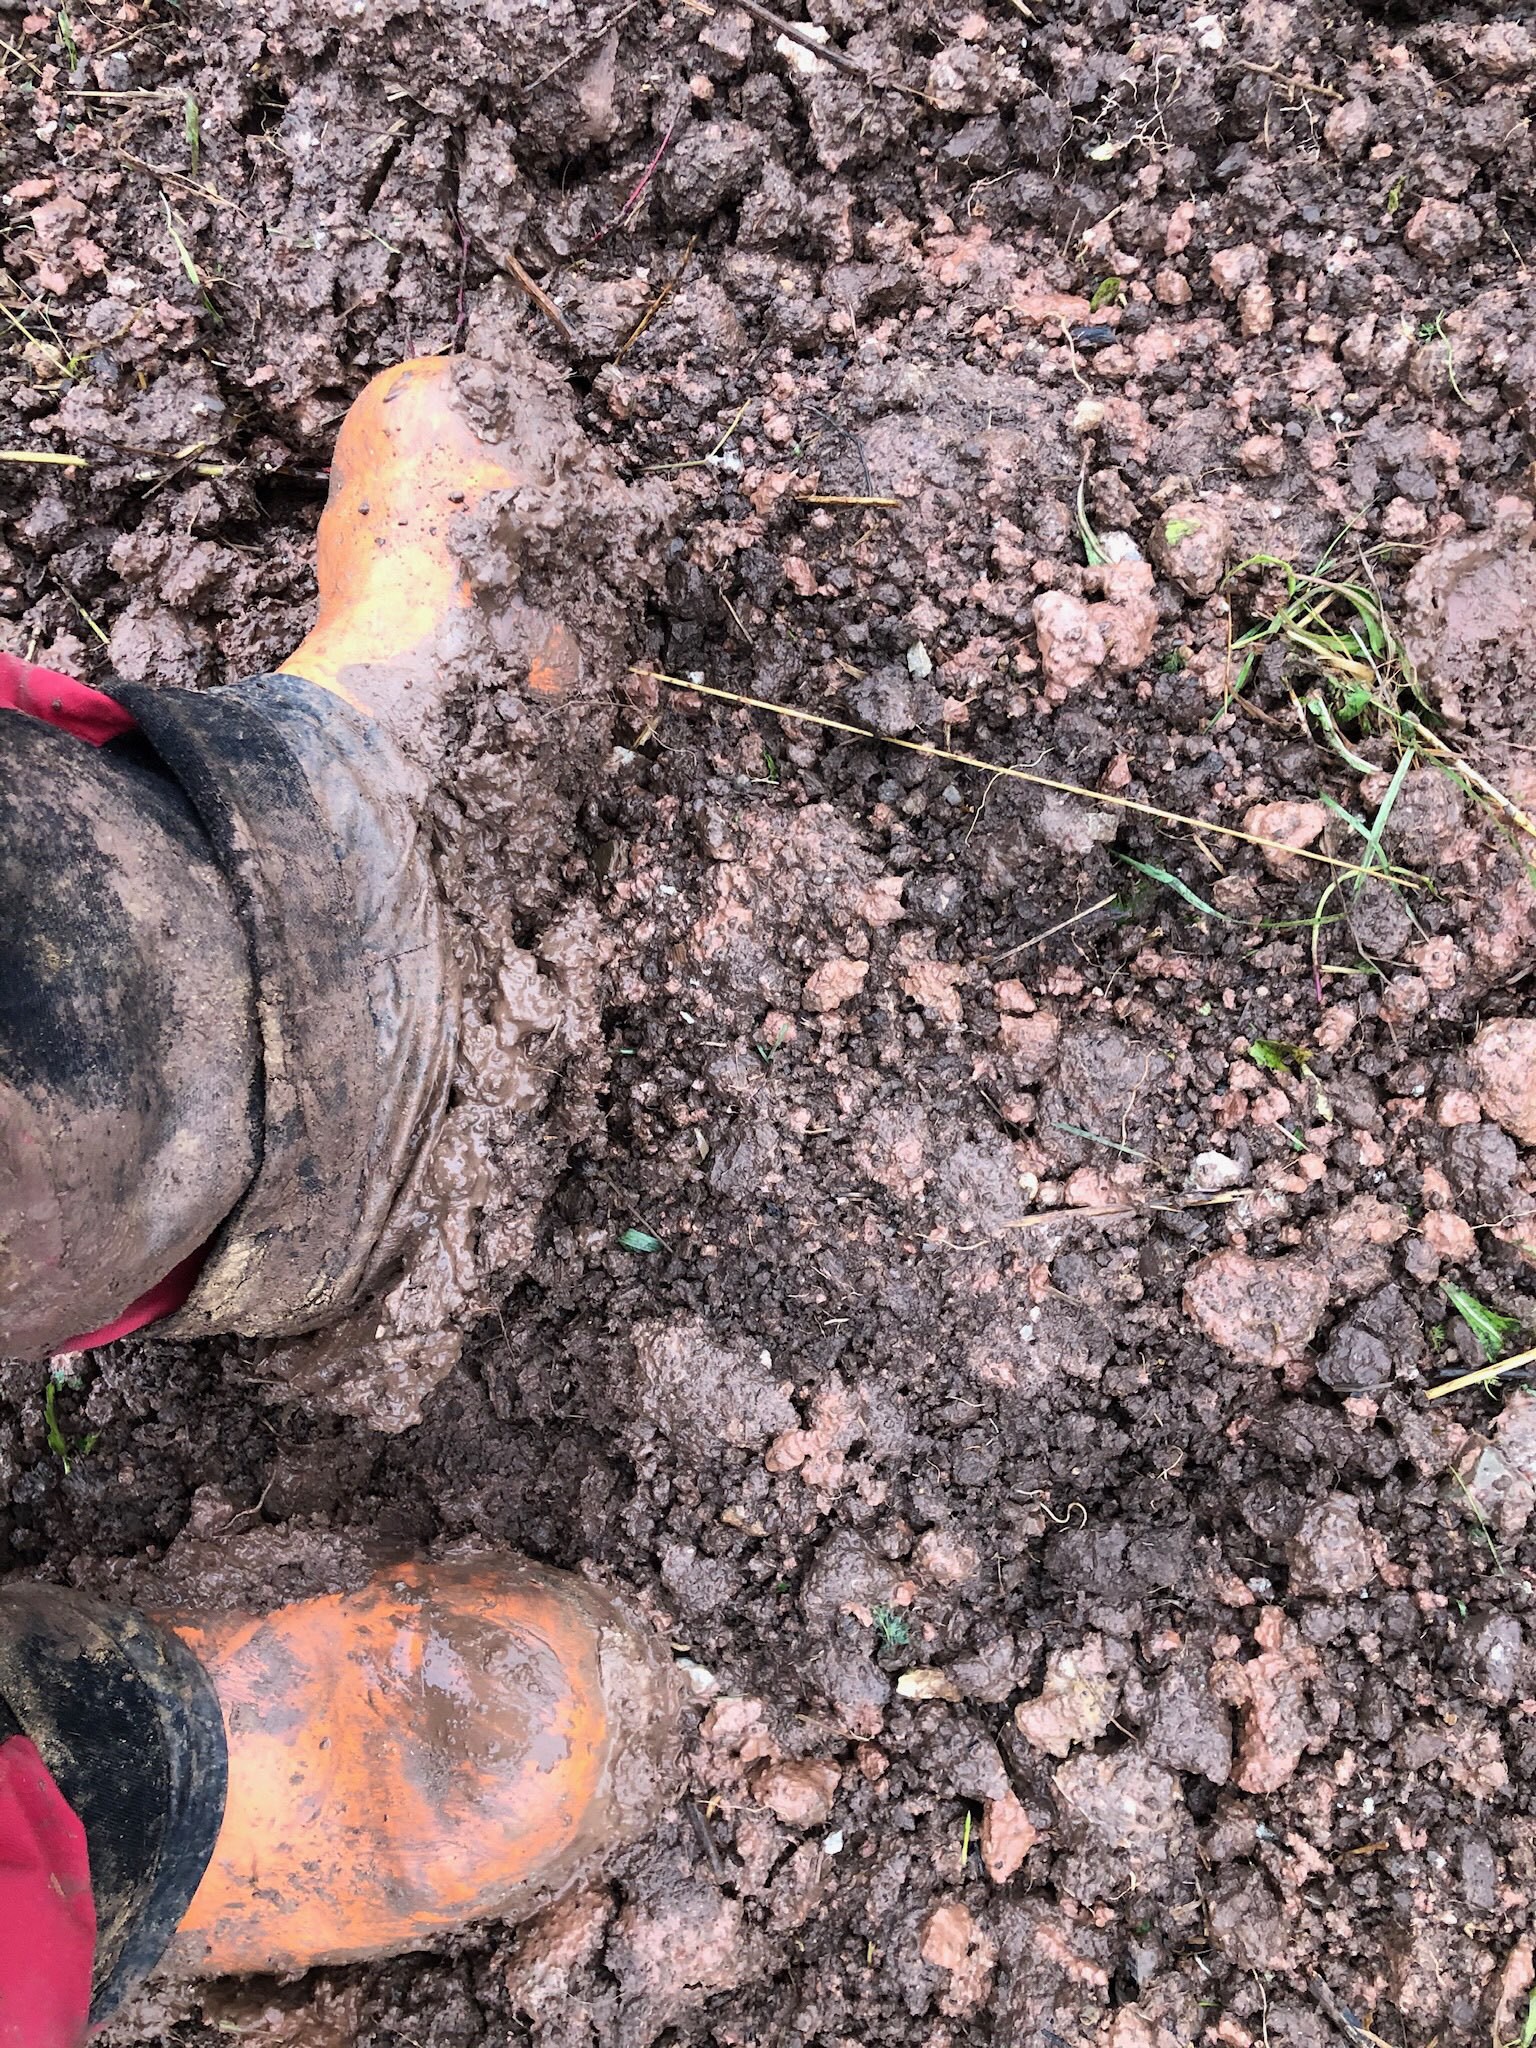 2 very muddy boots